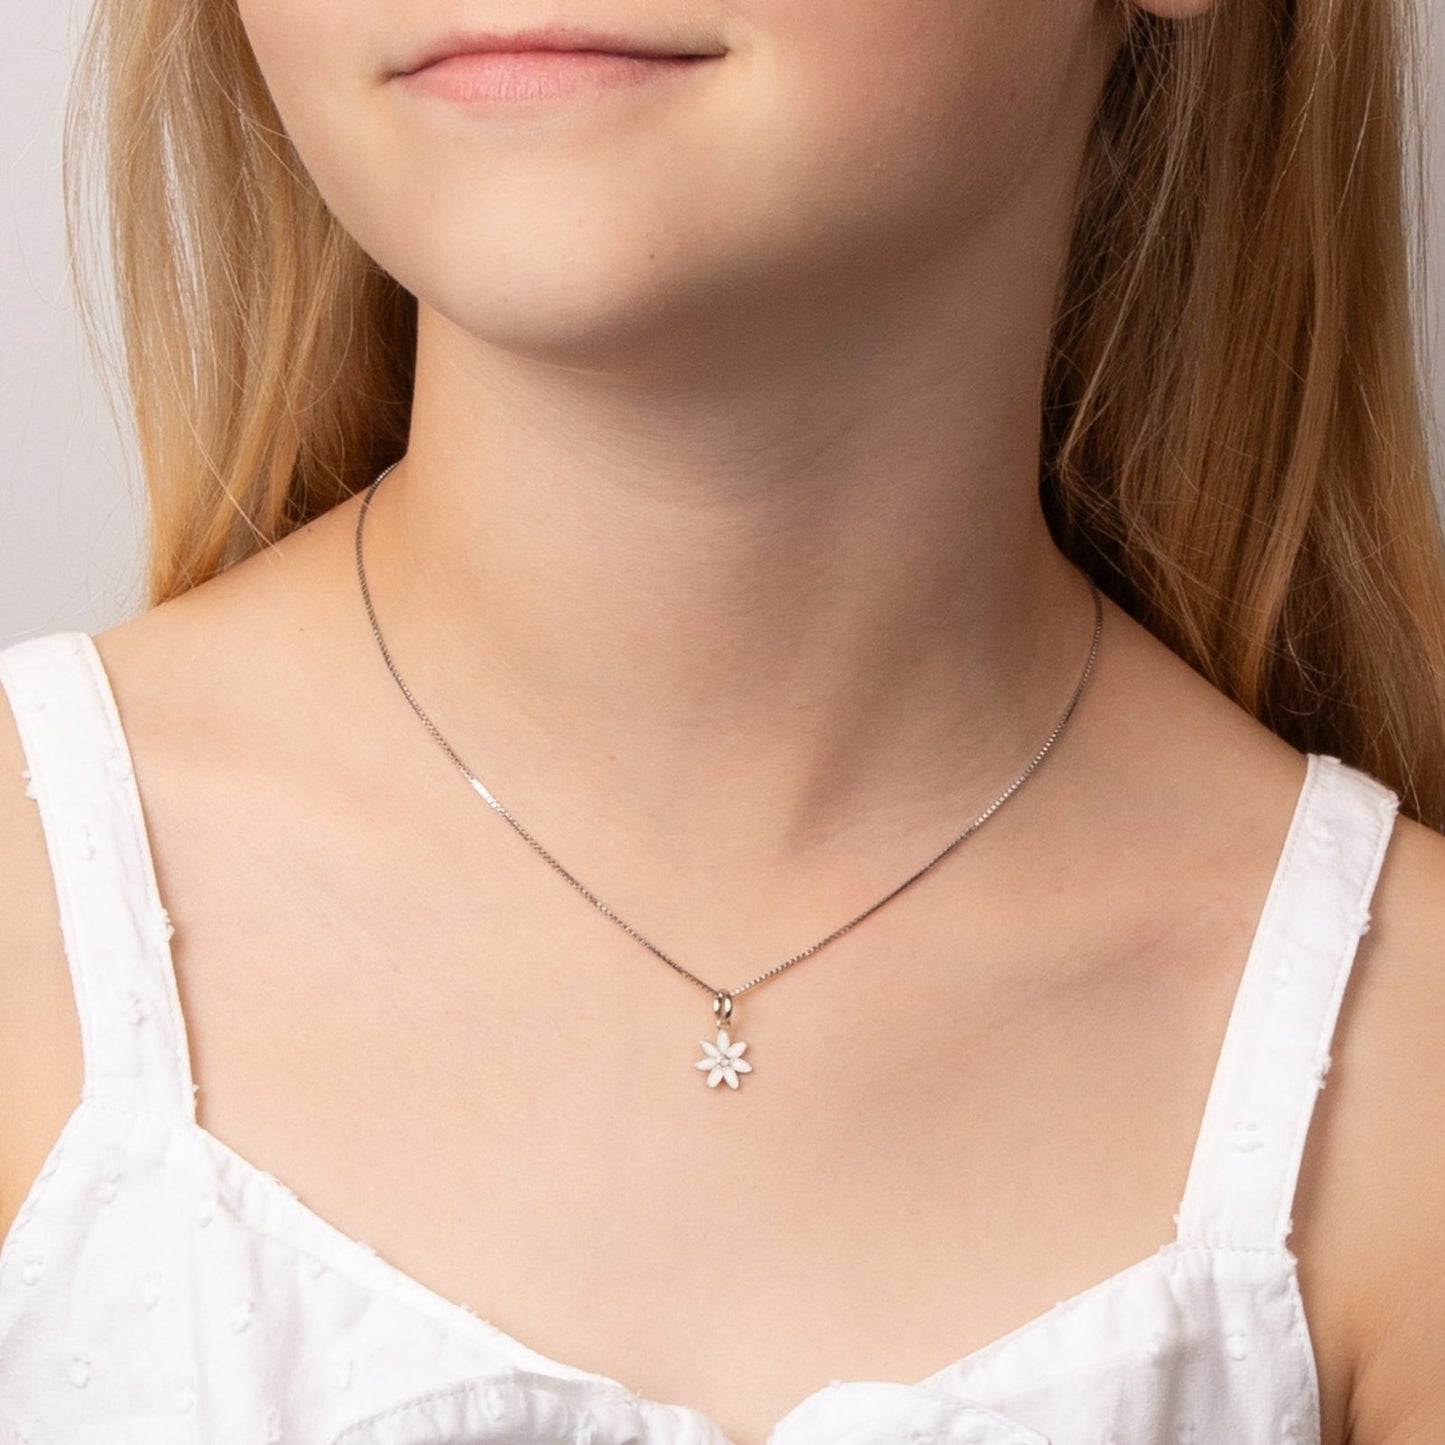 Children's Diamond Daisy Necklace on Little Girl's Neck.